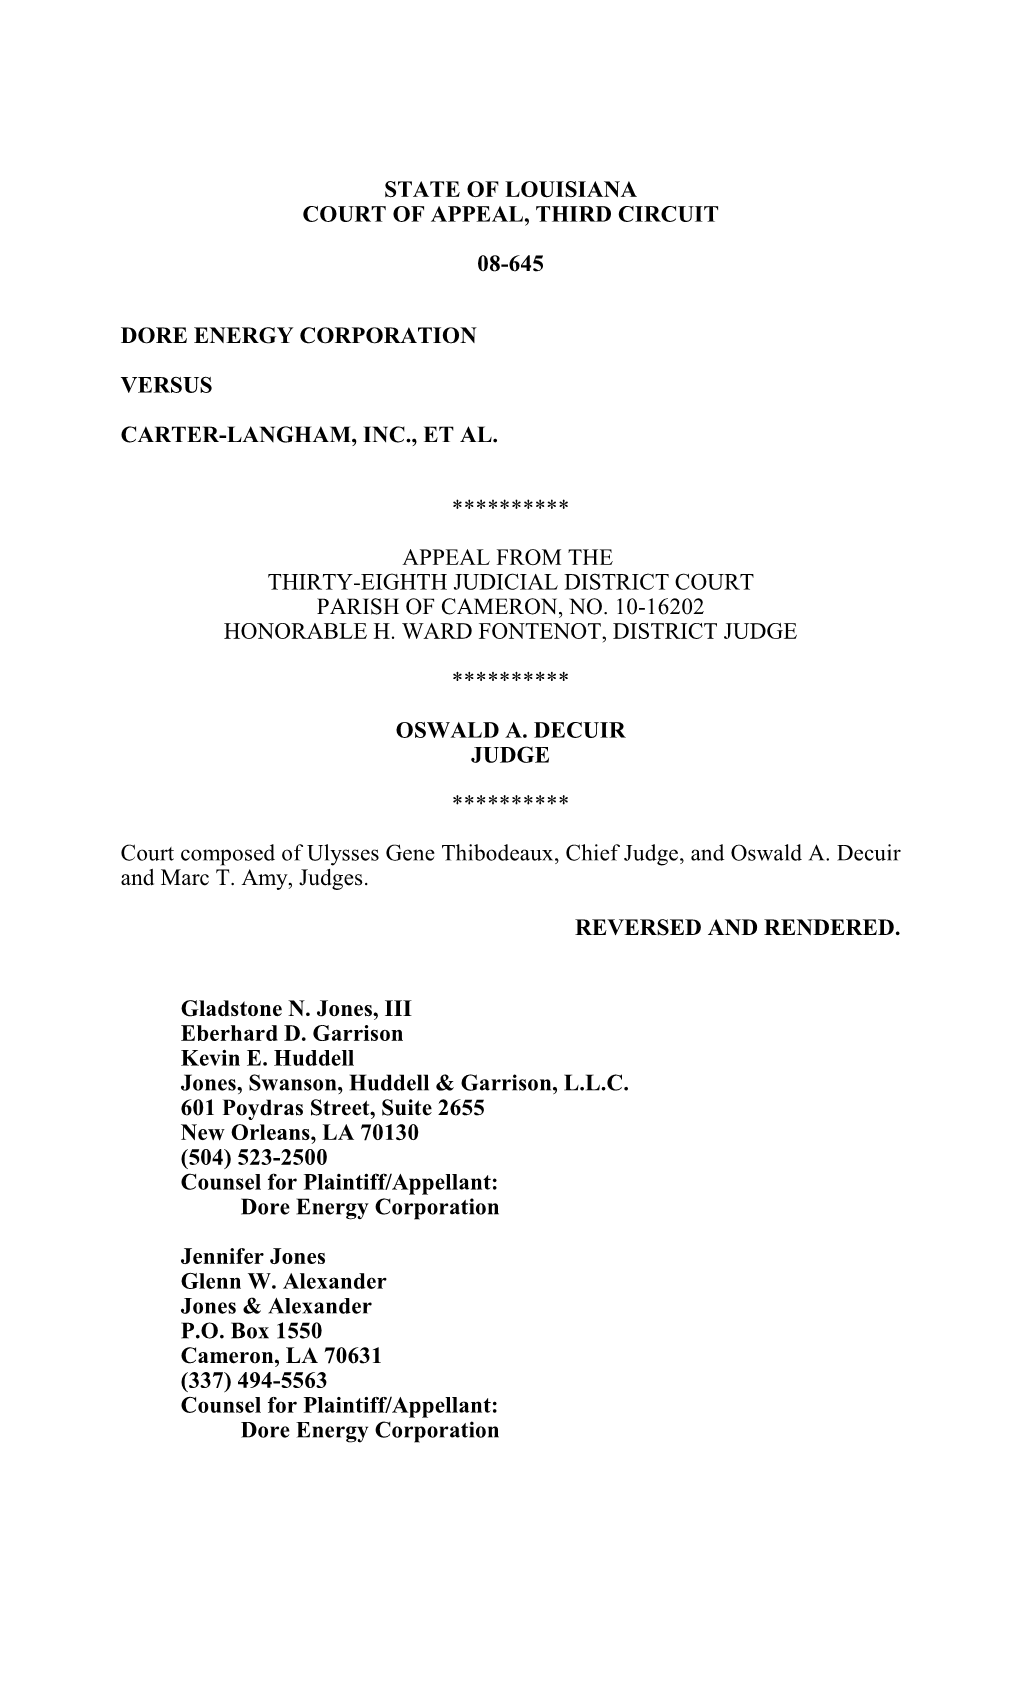 State of Louisiana Court of Appeal, Third Circuit 08-645 Dore Energy Corporation Versus Carter-Langham, Inc., Et